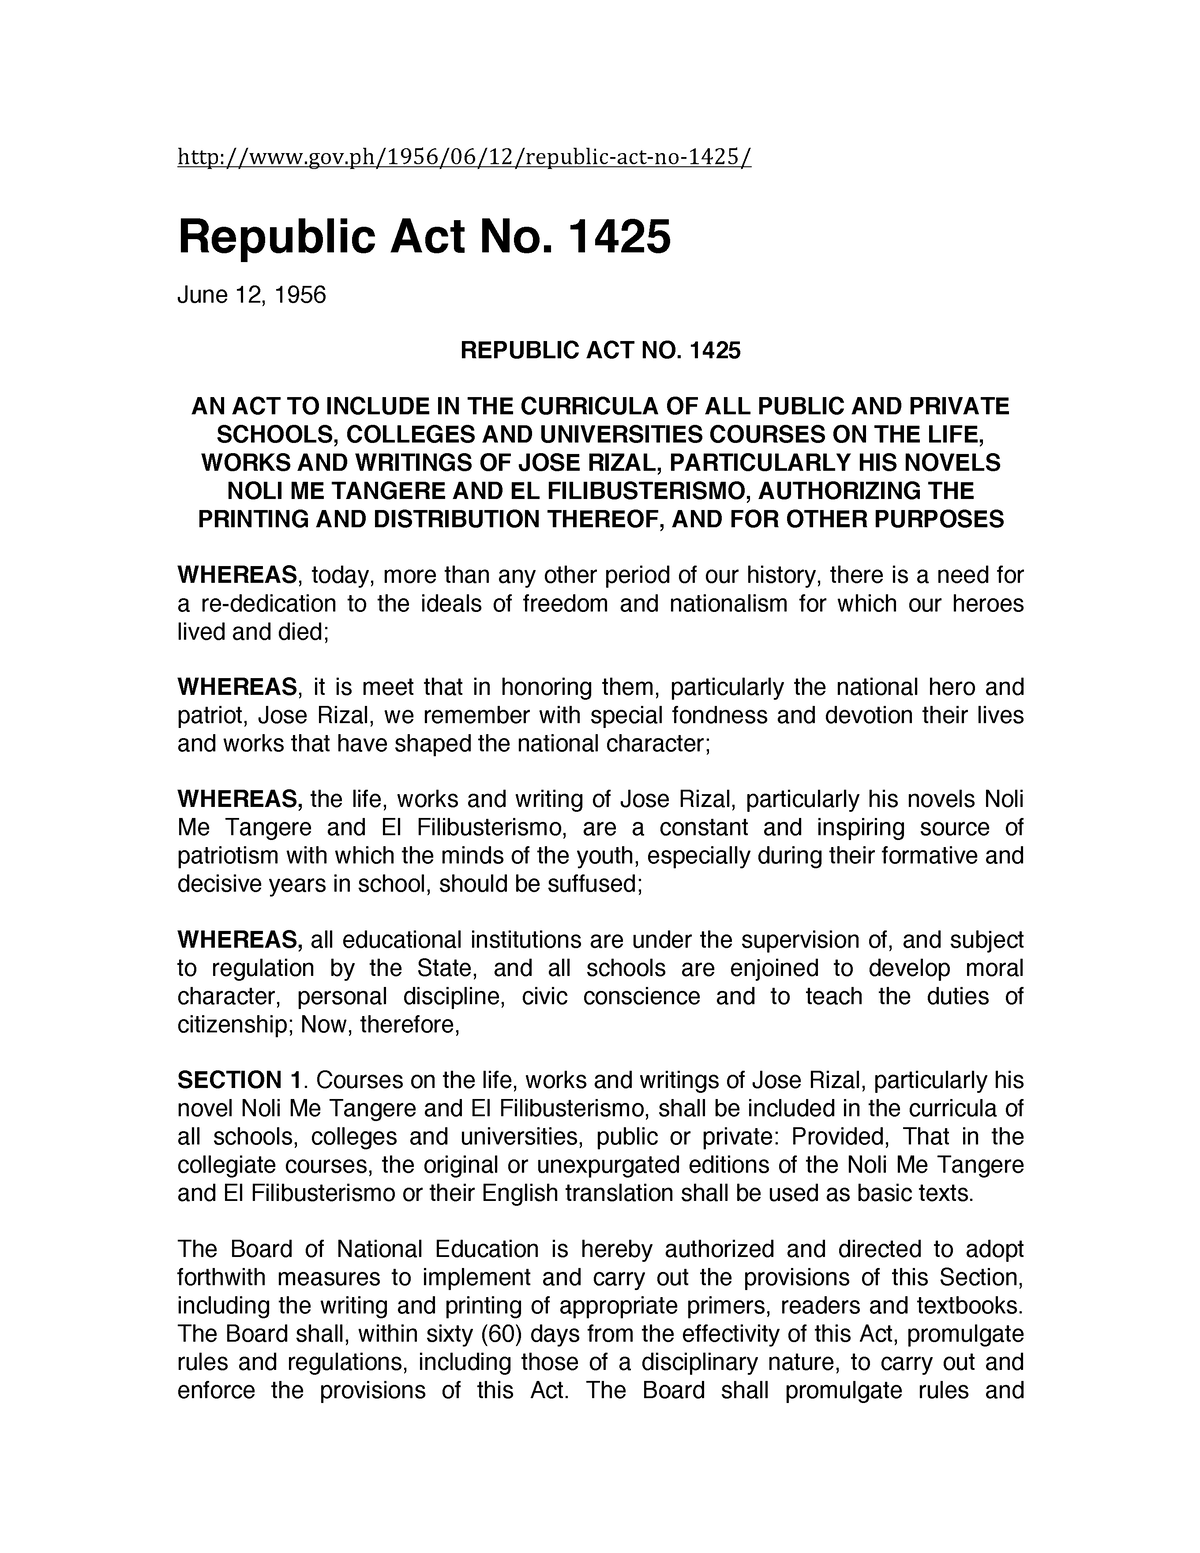 The Rizal Law REPUBLIC ACT NO. 1425 - gov/1956/06/12/republic-act-no